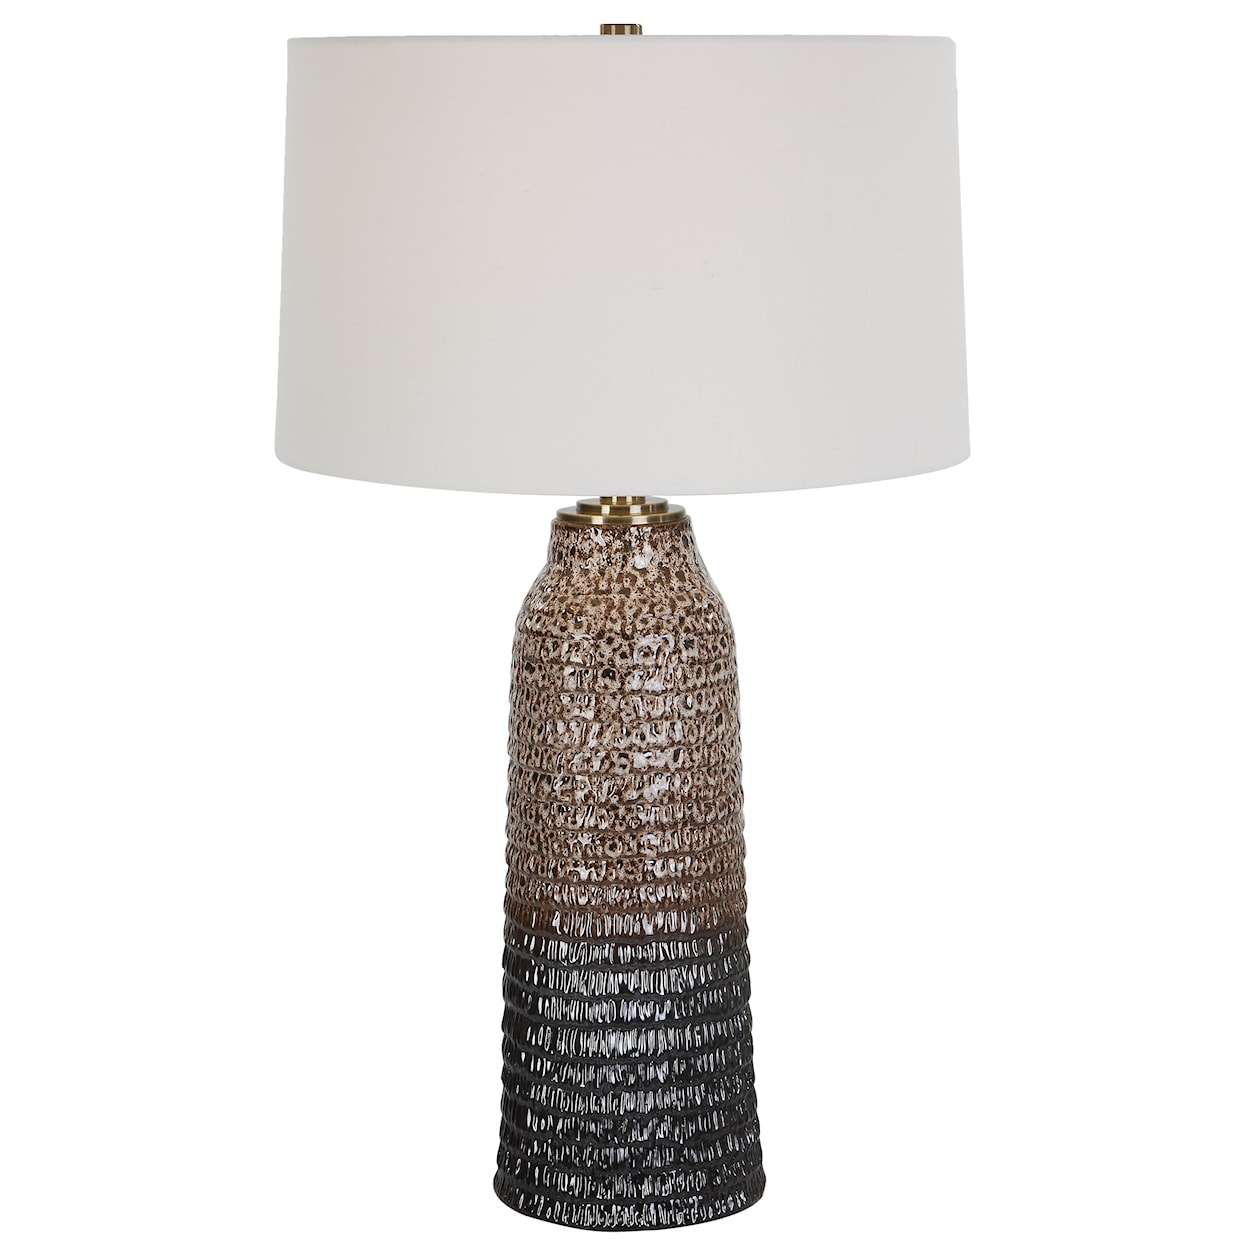 Uttermost Padma Padma Mottled Table Lamp